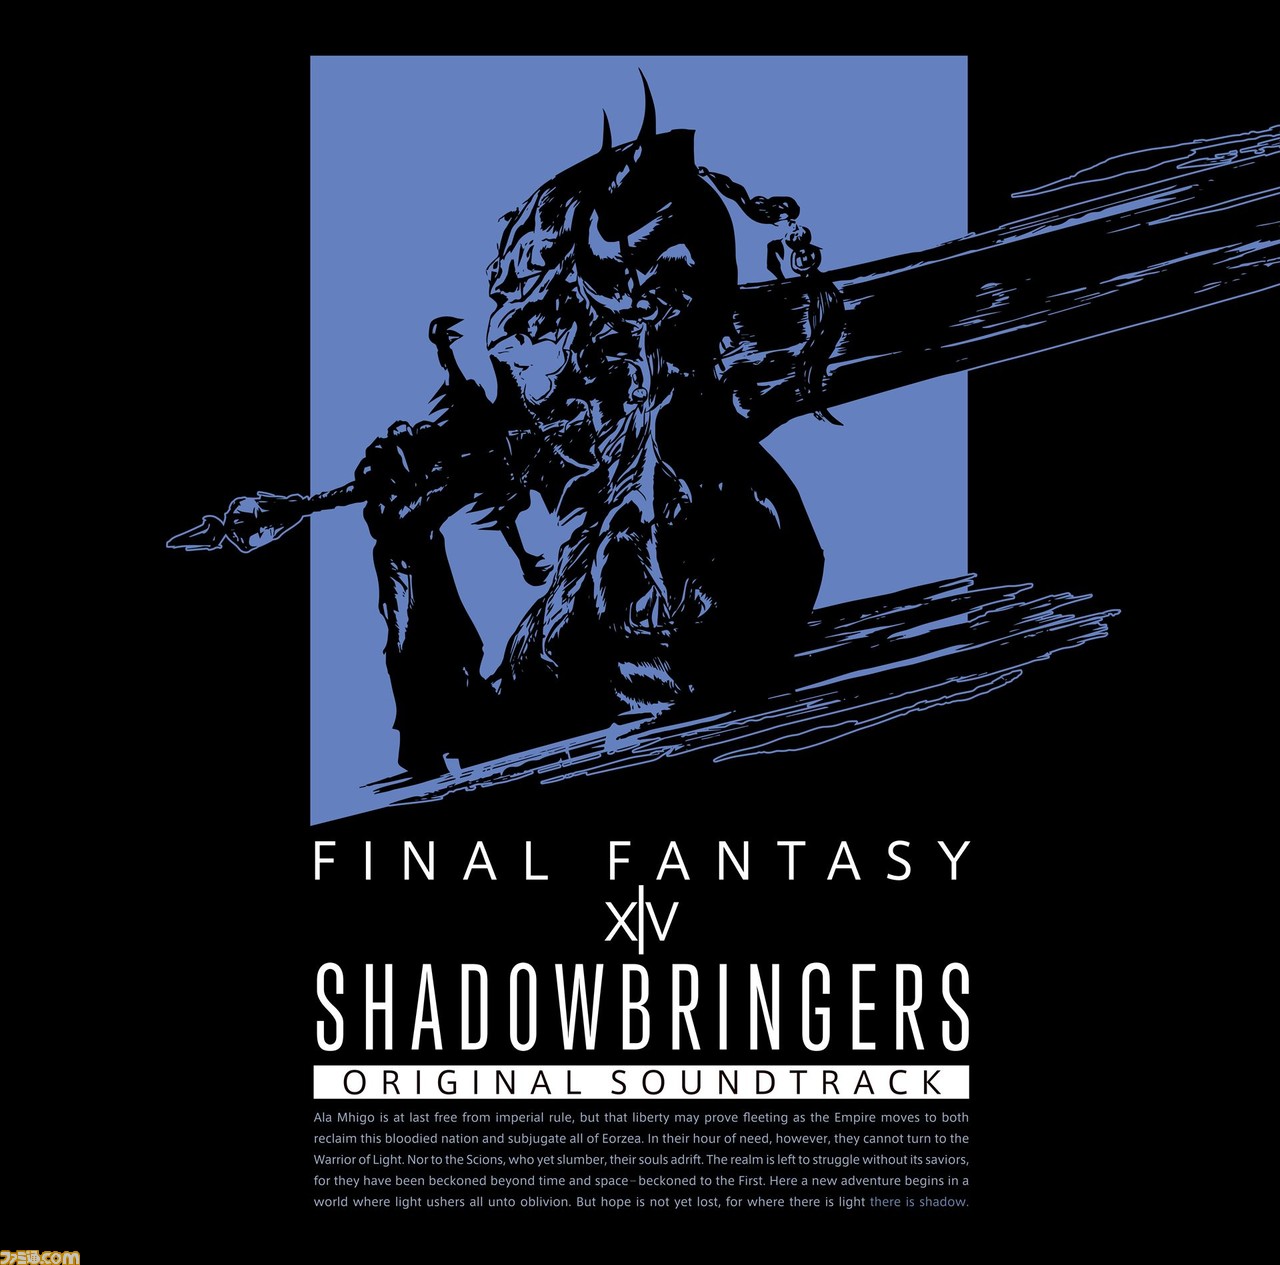 Ff14 の 漆黒のヴィランズ の楽曲を含む全88曲を収録した最新サントラ Shadowbringers Final Fantasy Xiv Original Soundtrack が9月11日に発売 ファミ通 Com